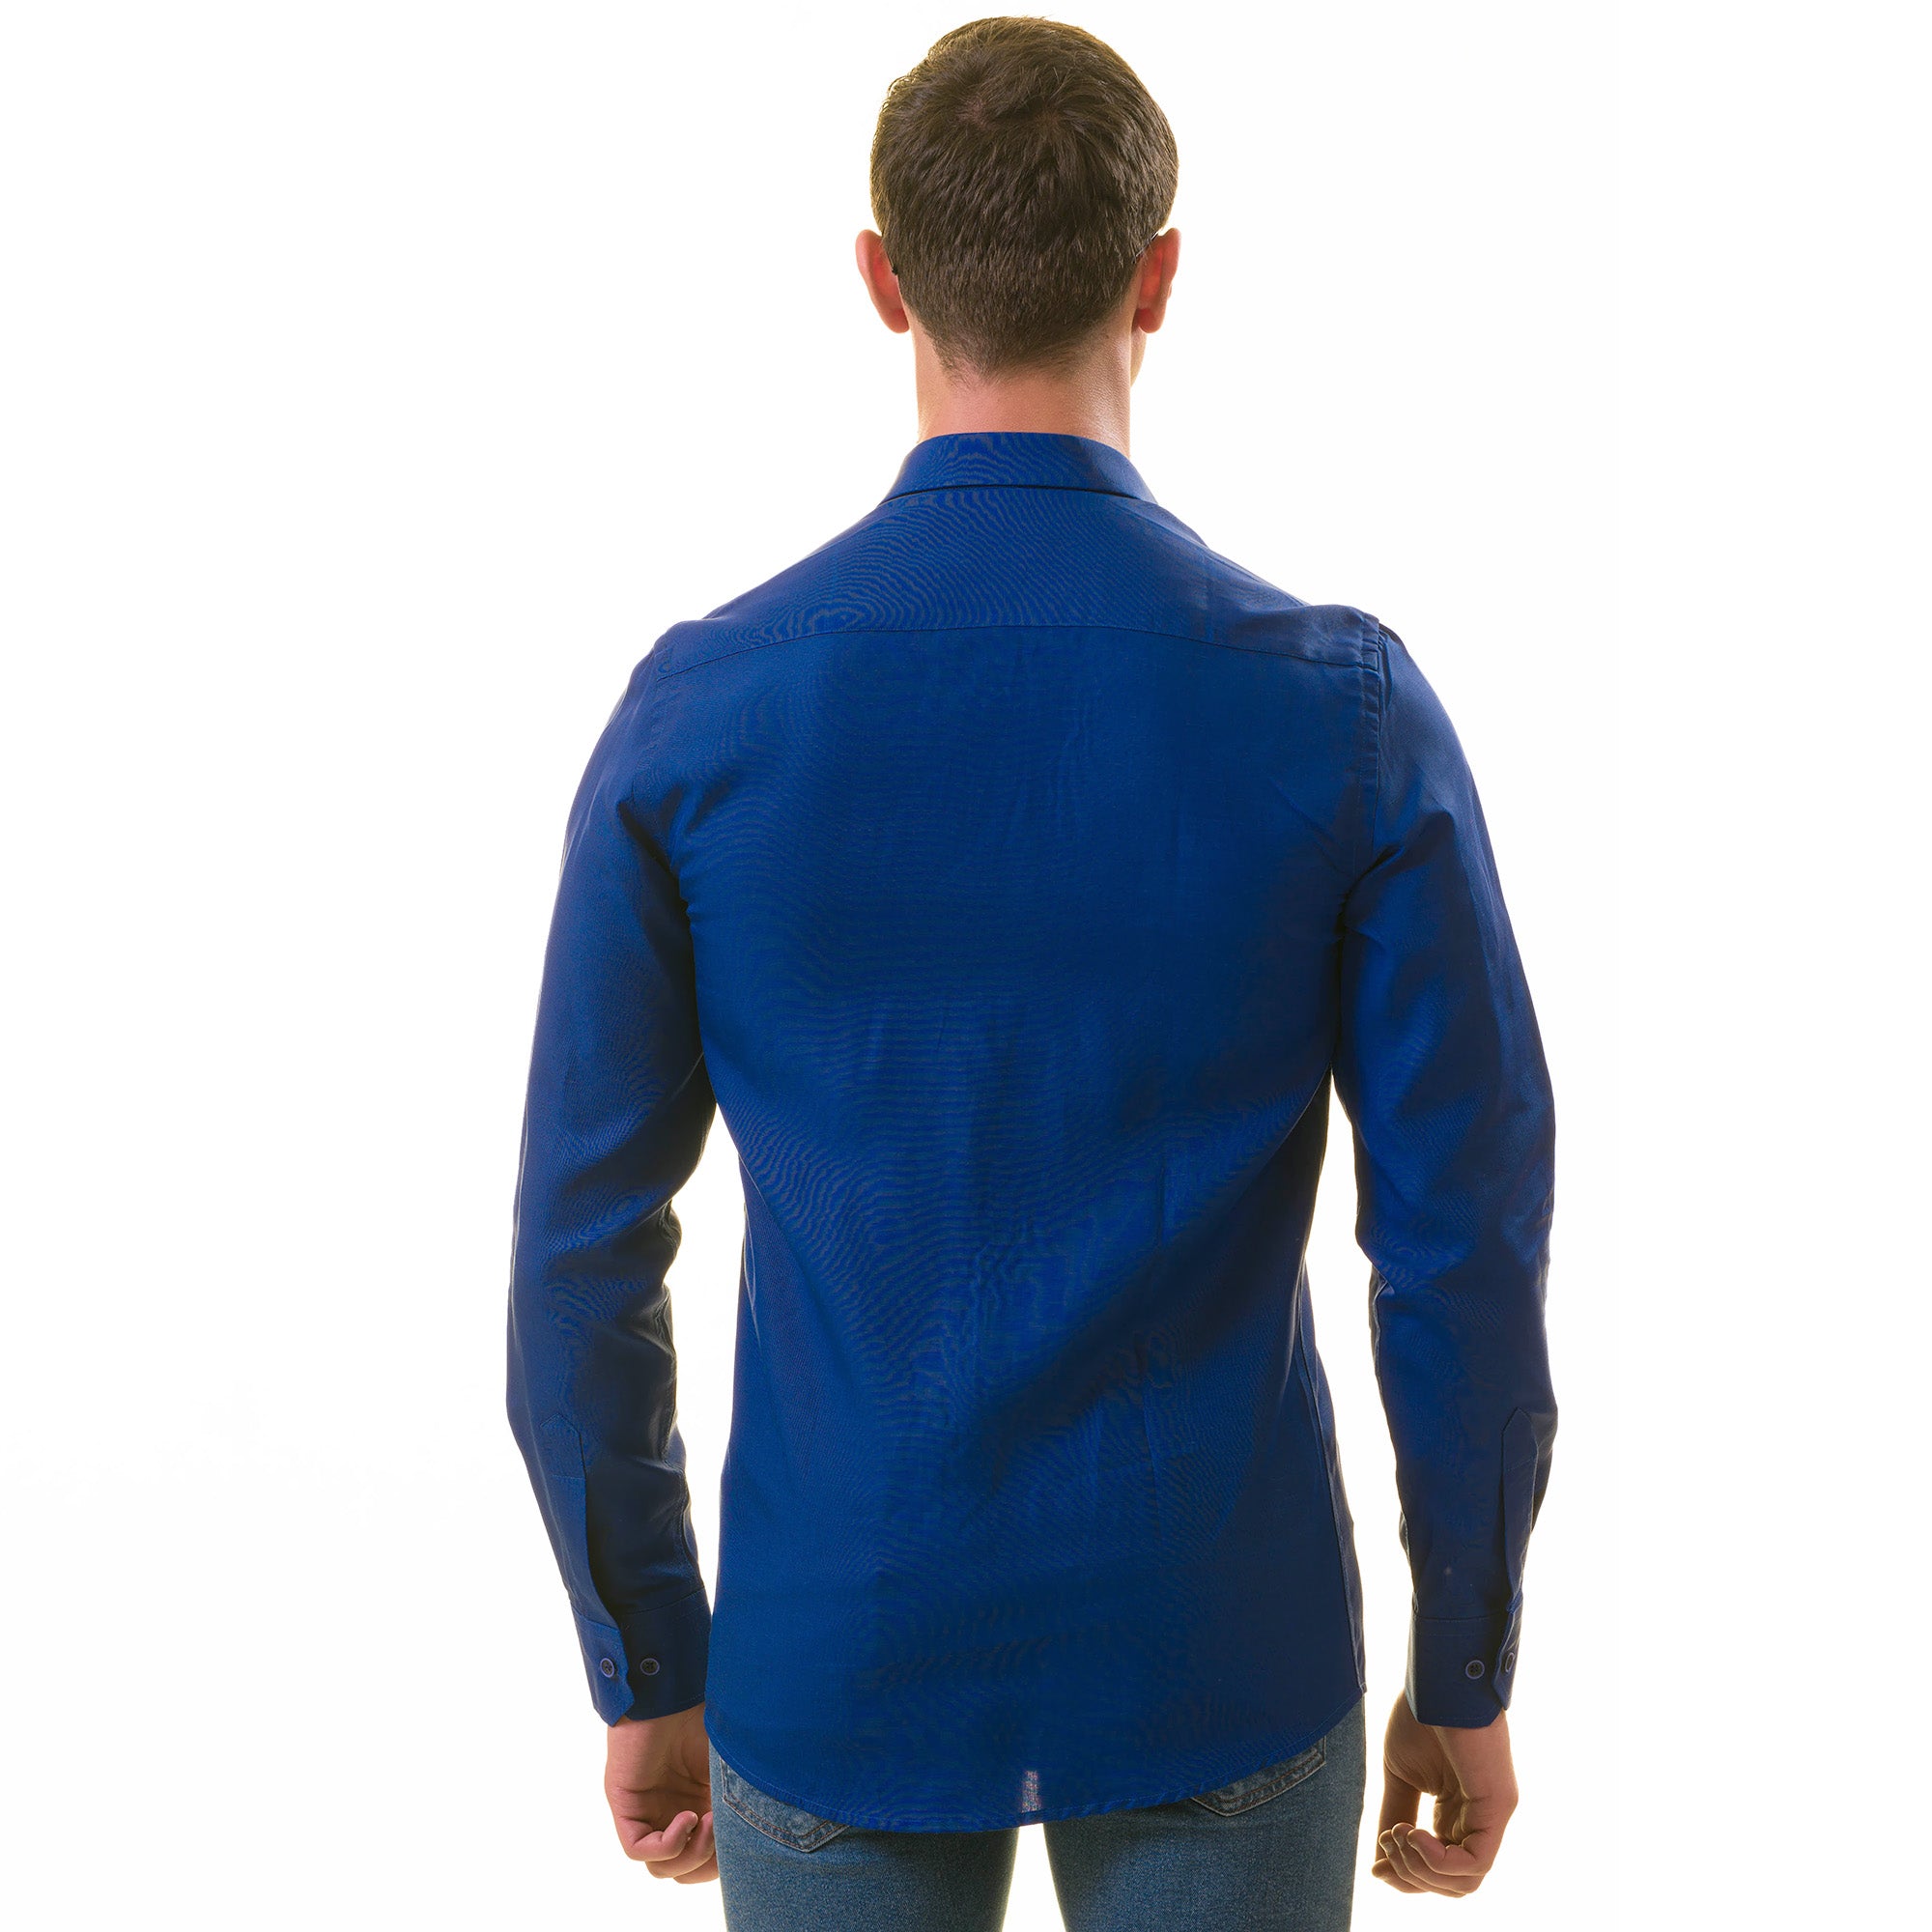 Royal Blue Luxury Men's Tailor Fit Button Up European Made Linen Shirts